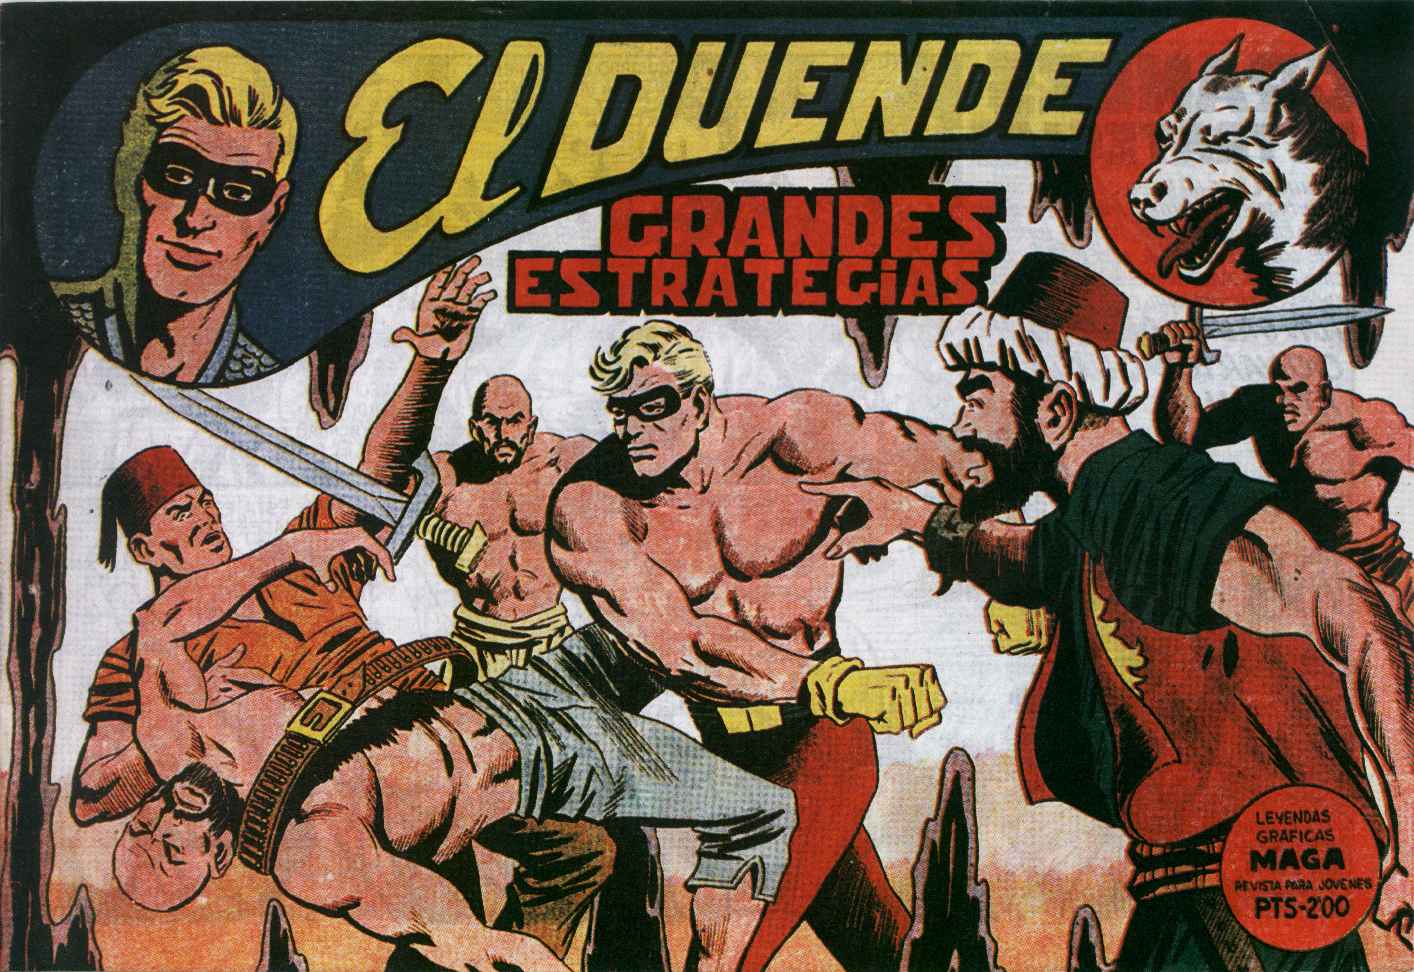 Comic Book Cover For El Duende 23 - Grandes estrategias